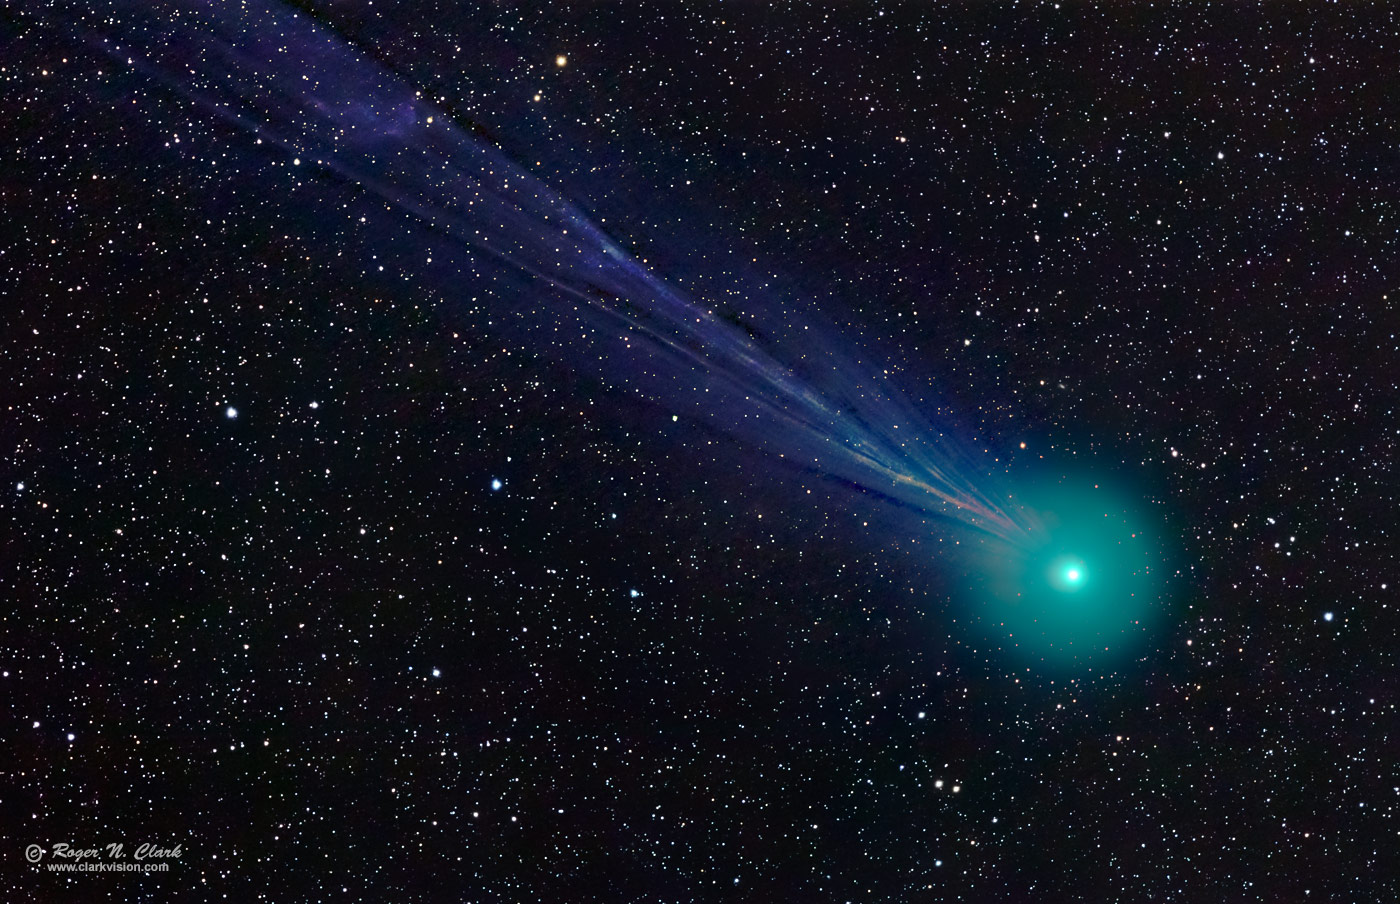 image comet-lovejoy-rnclark-mauna-kea-c01.15.2015.0J6A3169-89_h-c1-1400us.jpg is Copyrighted by Roger N. Clark, www.clarkvision.com